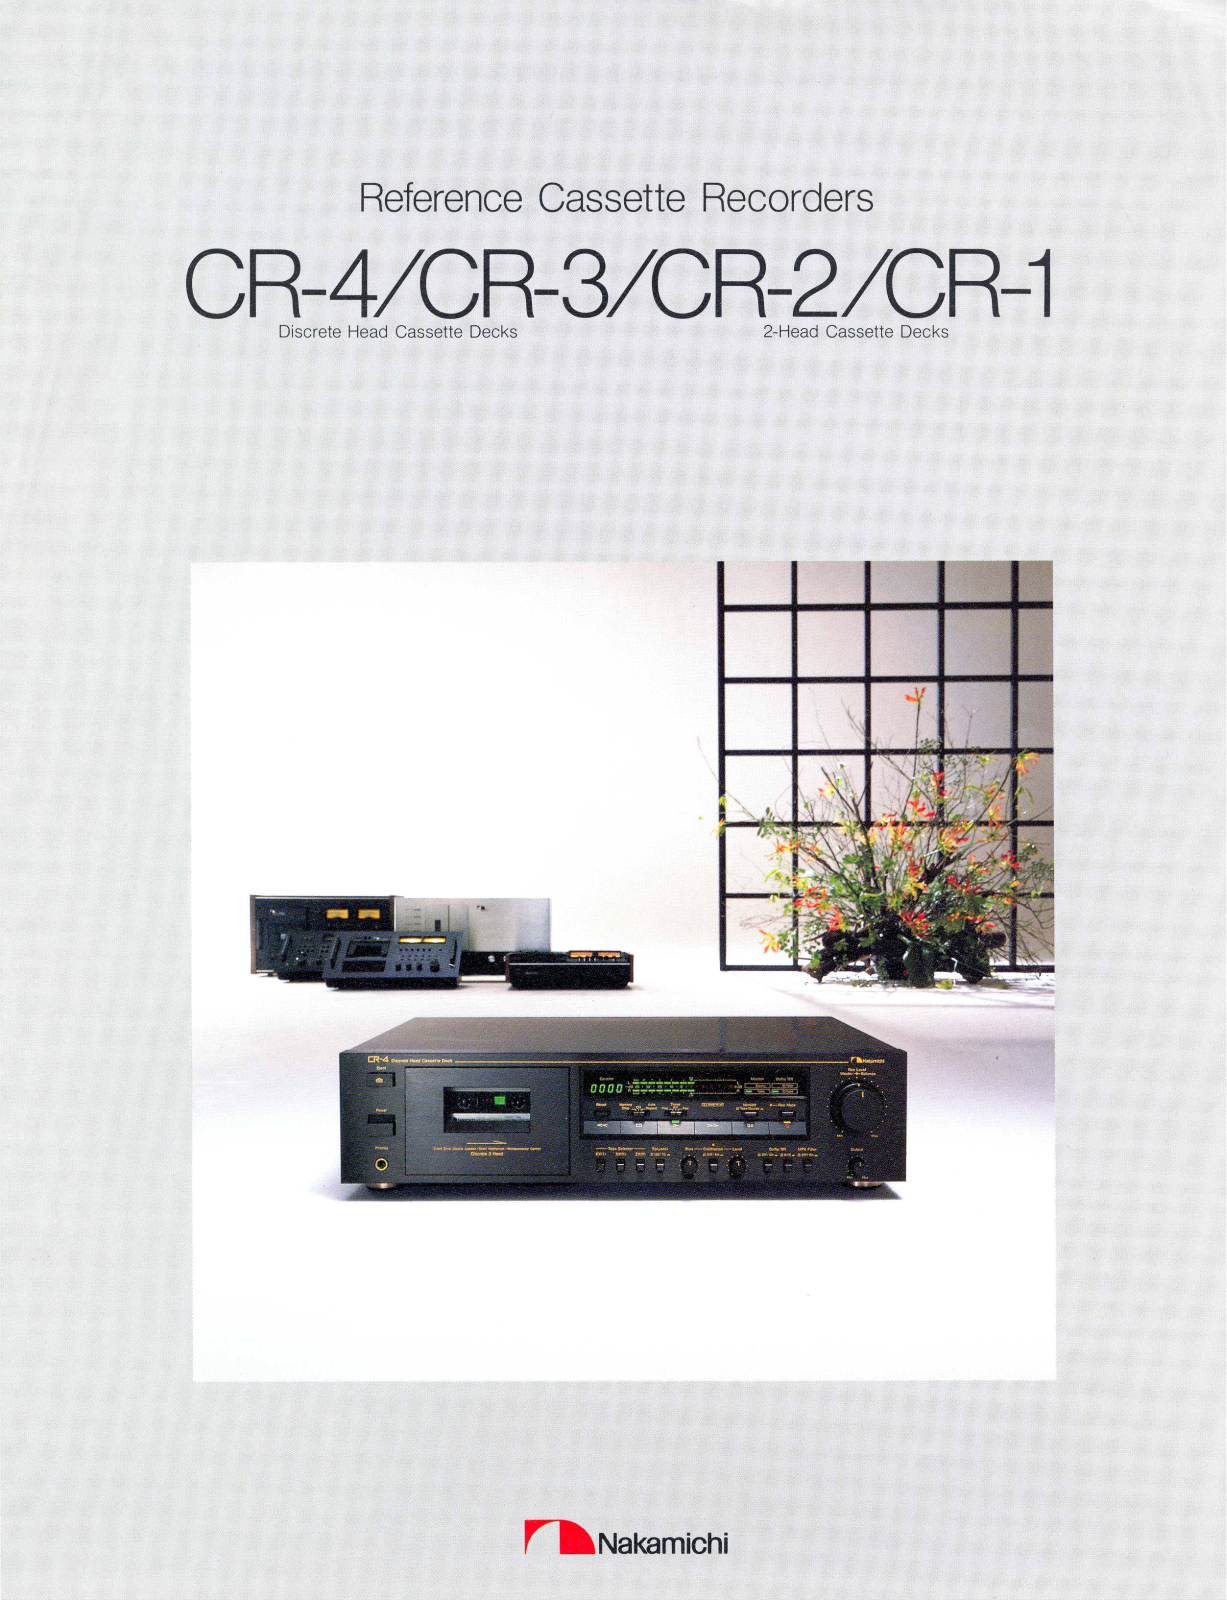 Nakamichi CR-1, CR-2, CR-3, CR-4 Brochure